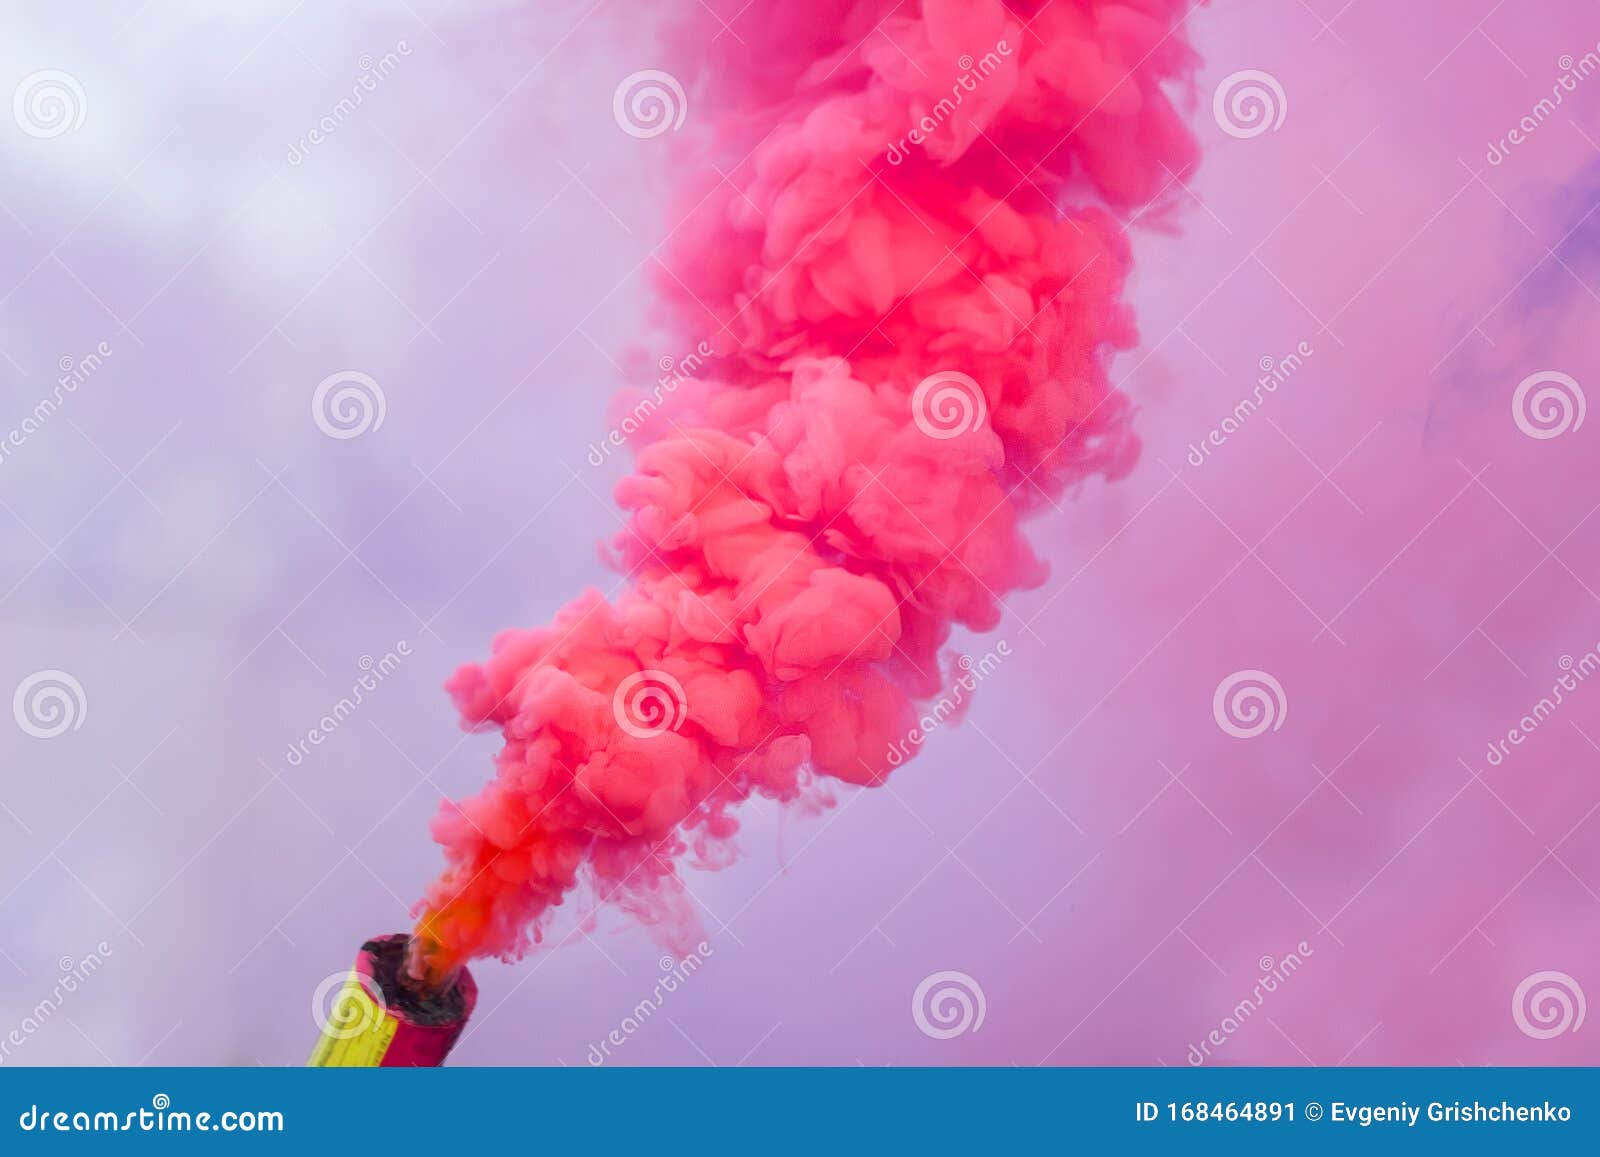 Femme couverte d'une bombe fumigène rose photo – Photo Rouge